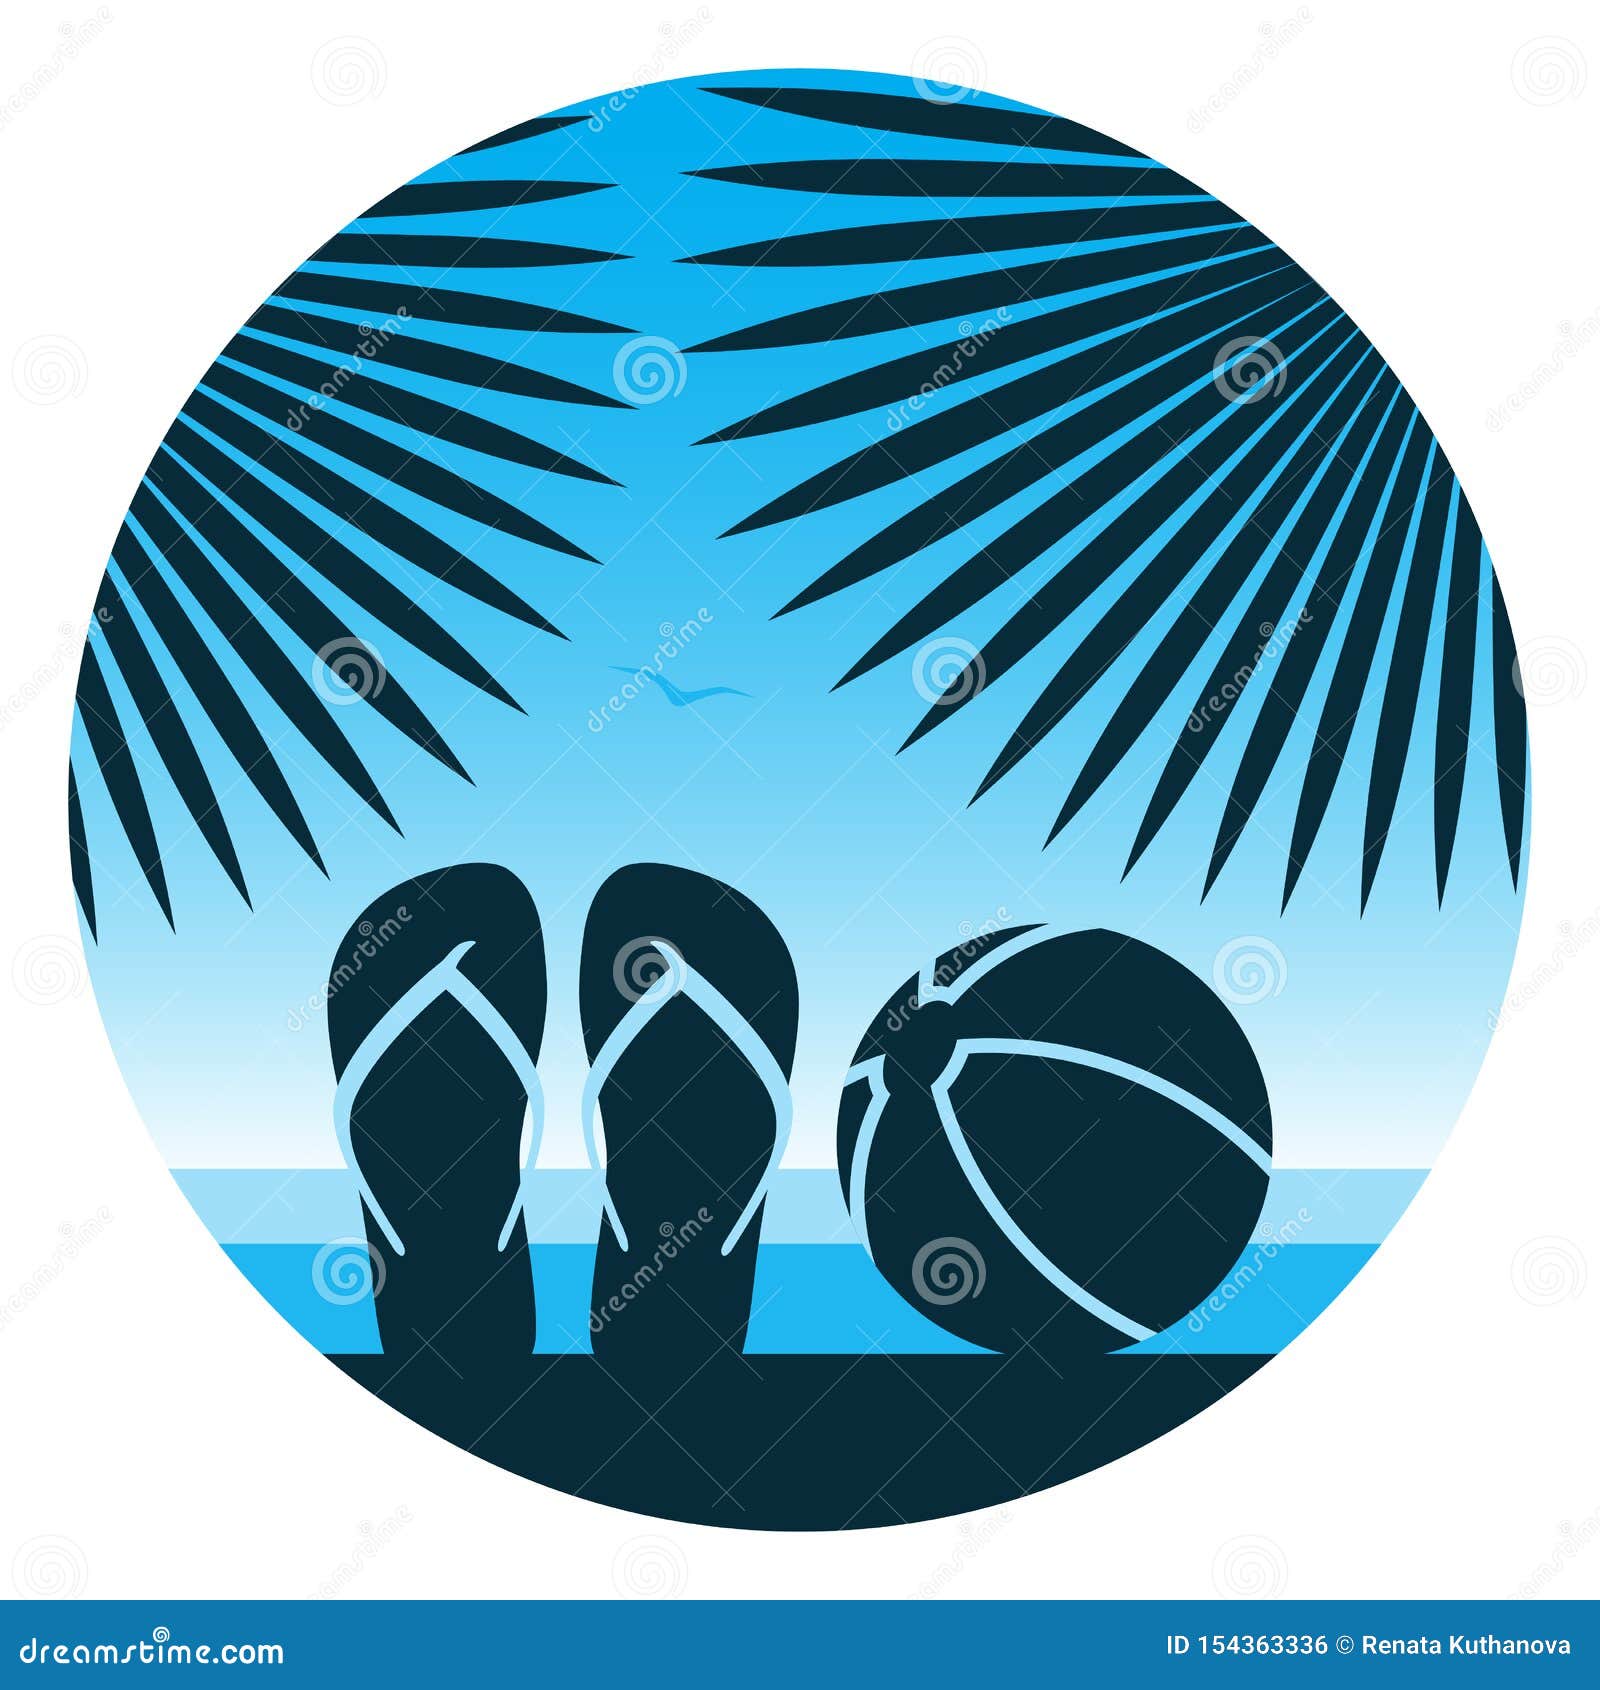 Flip flops and beach ball stock illustration. Illustration of play ...